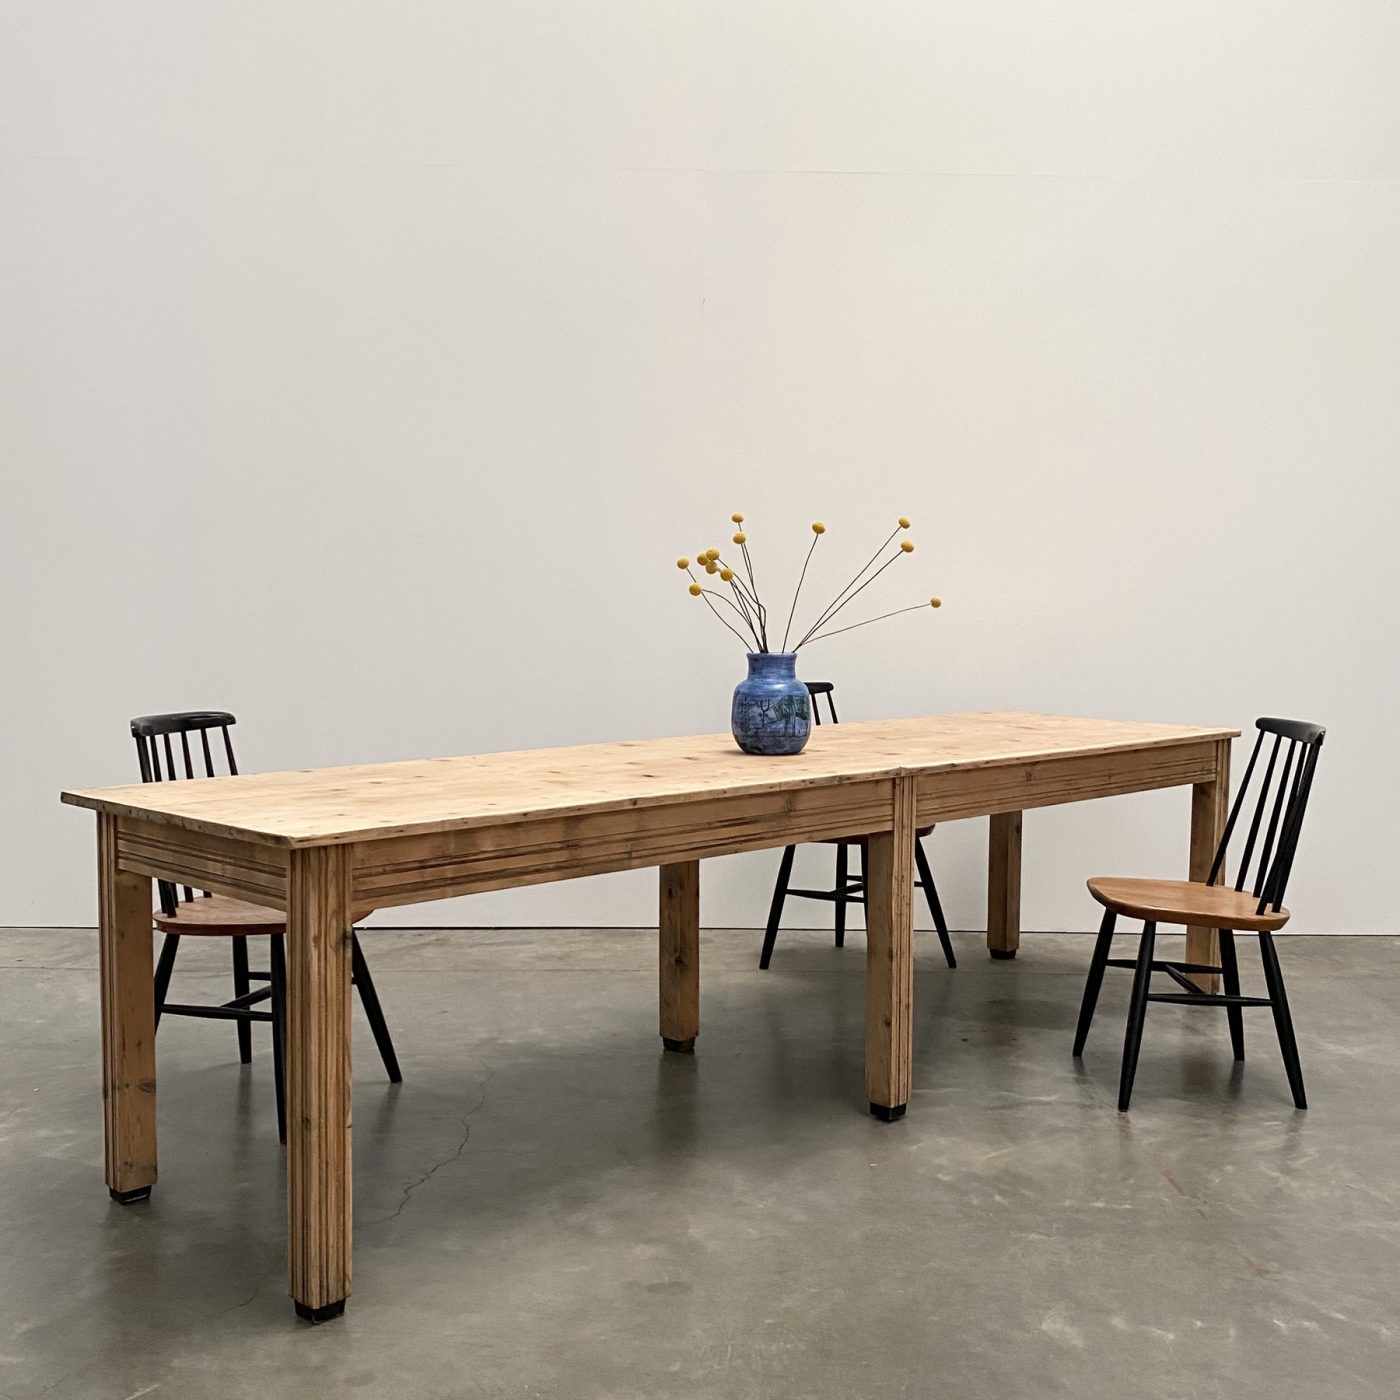 objet-vagabond-office-table0004